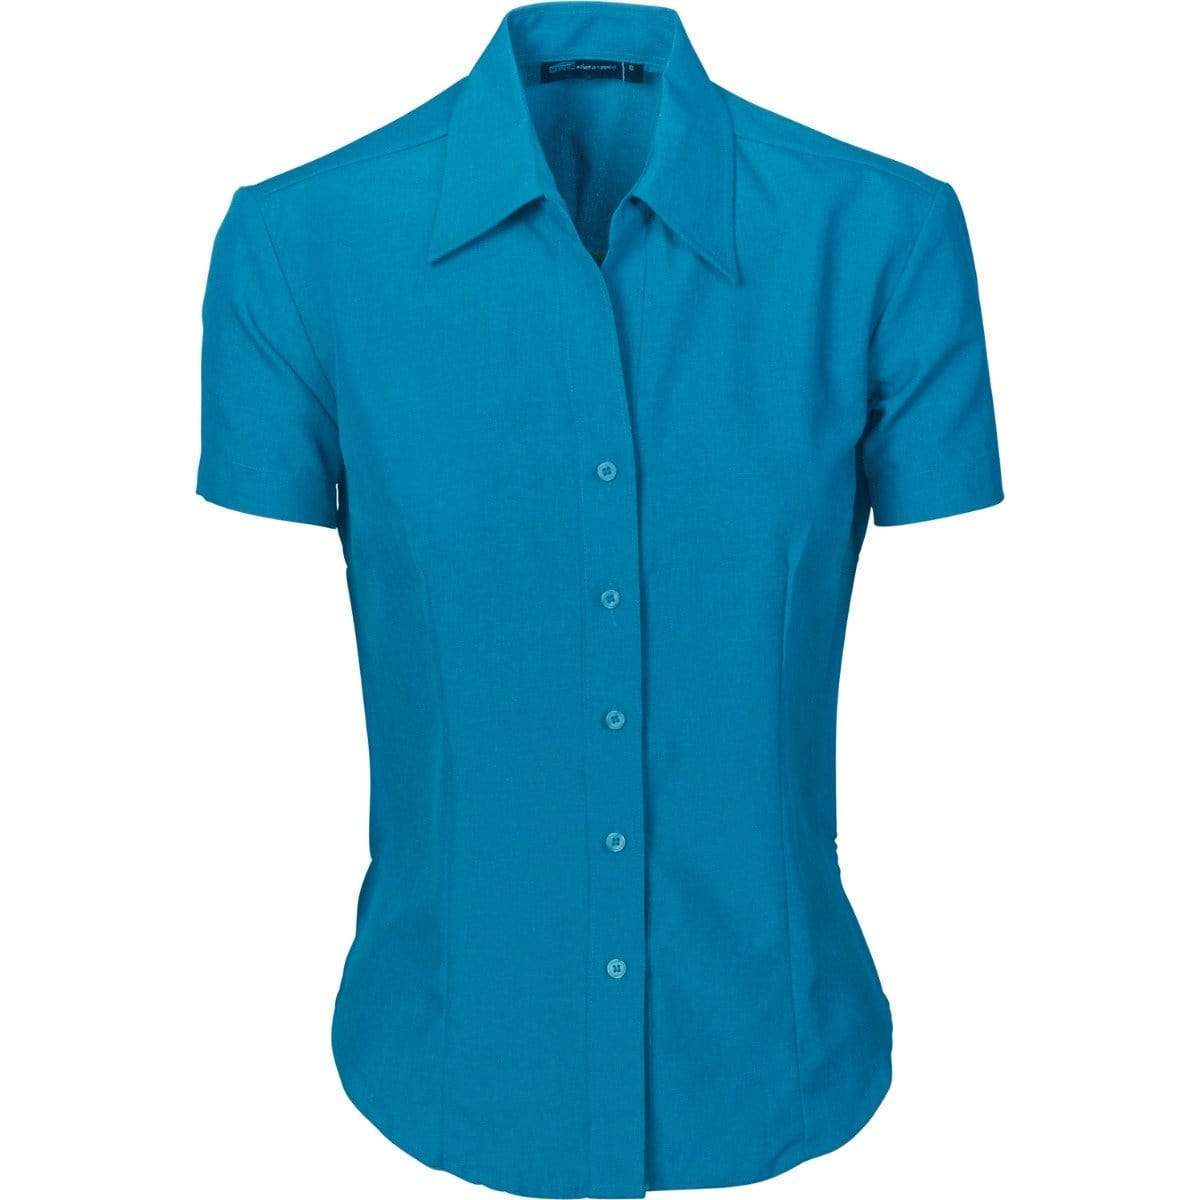 DNC WORKWEAR Ladies Cool-Breathe Short Sleeve Shirt 4237 - Simply Scrubs Australia